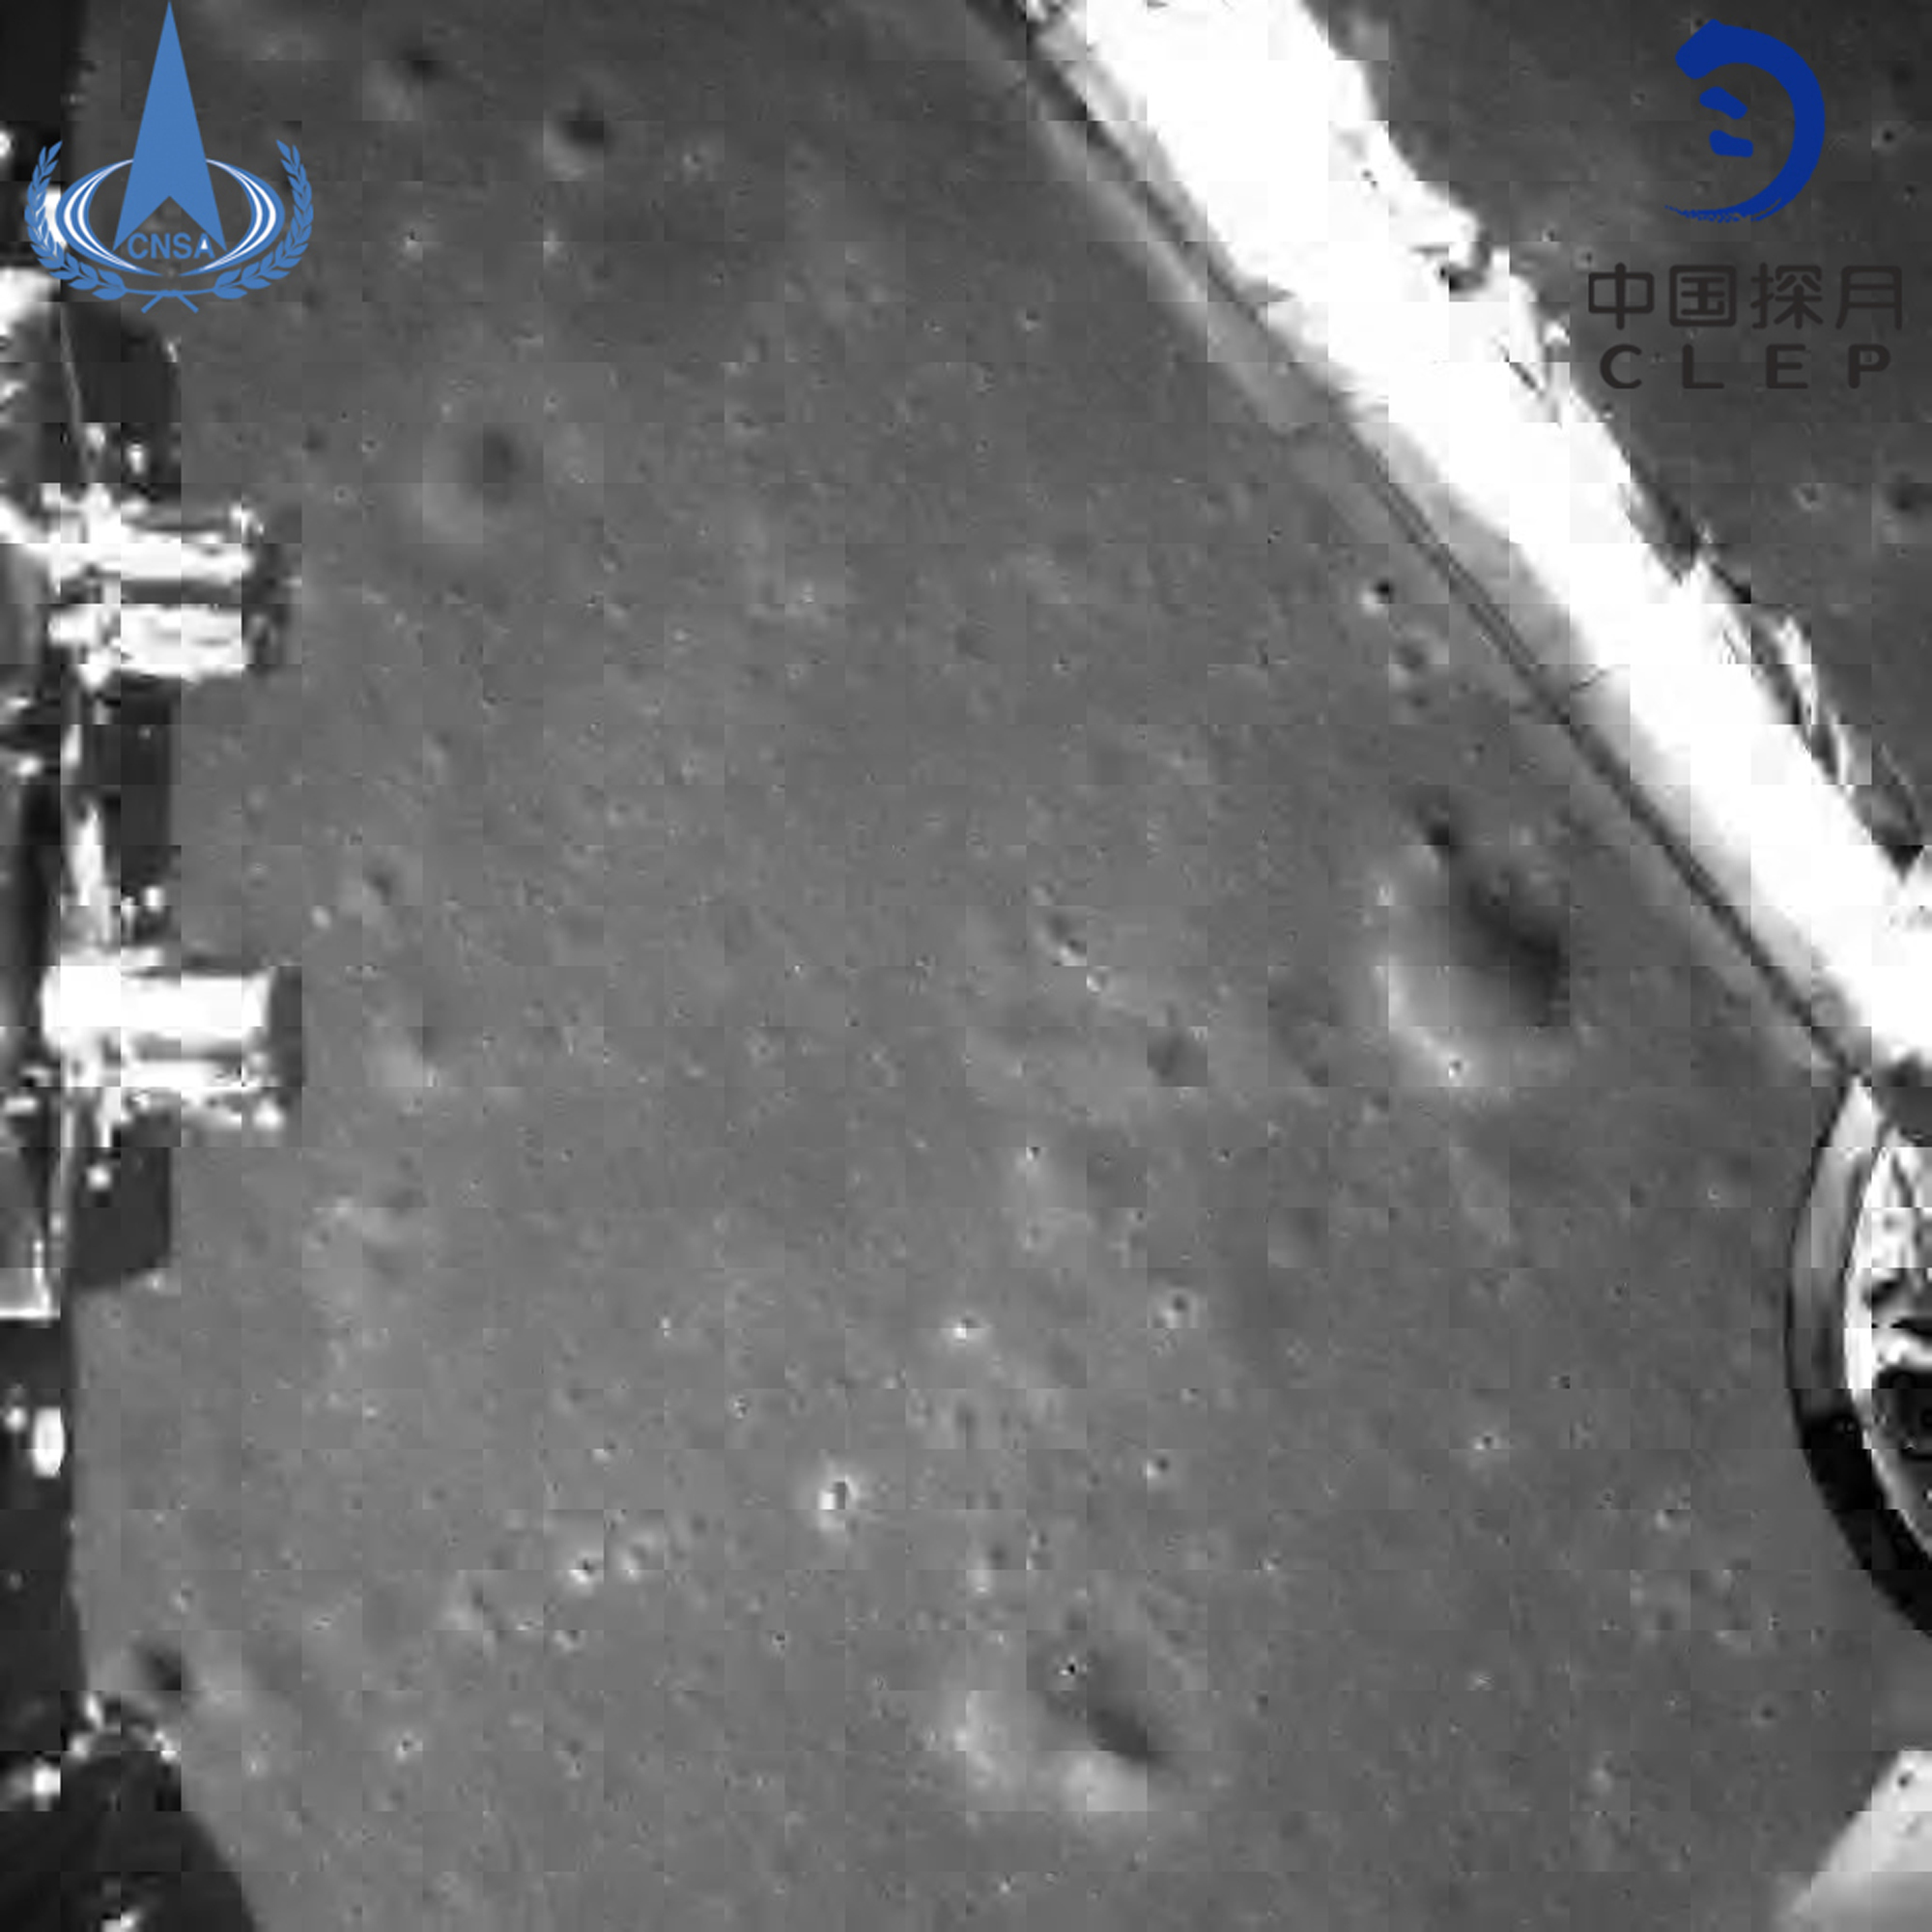 Image taken on the moon